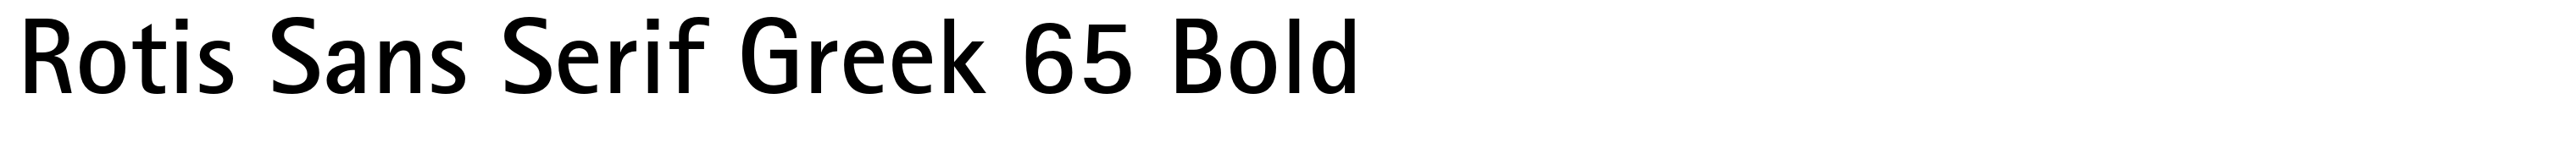 Rotis Sans Serif Greek 65 Bold